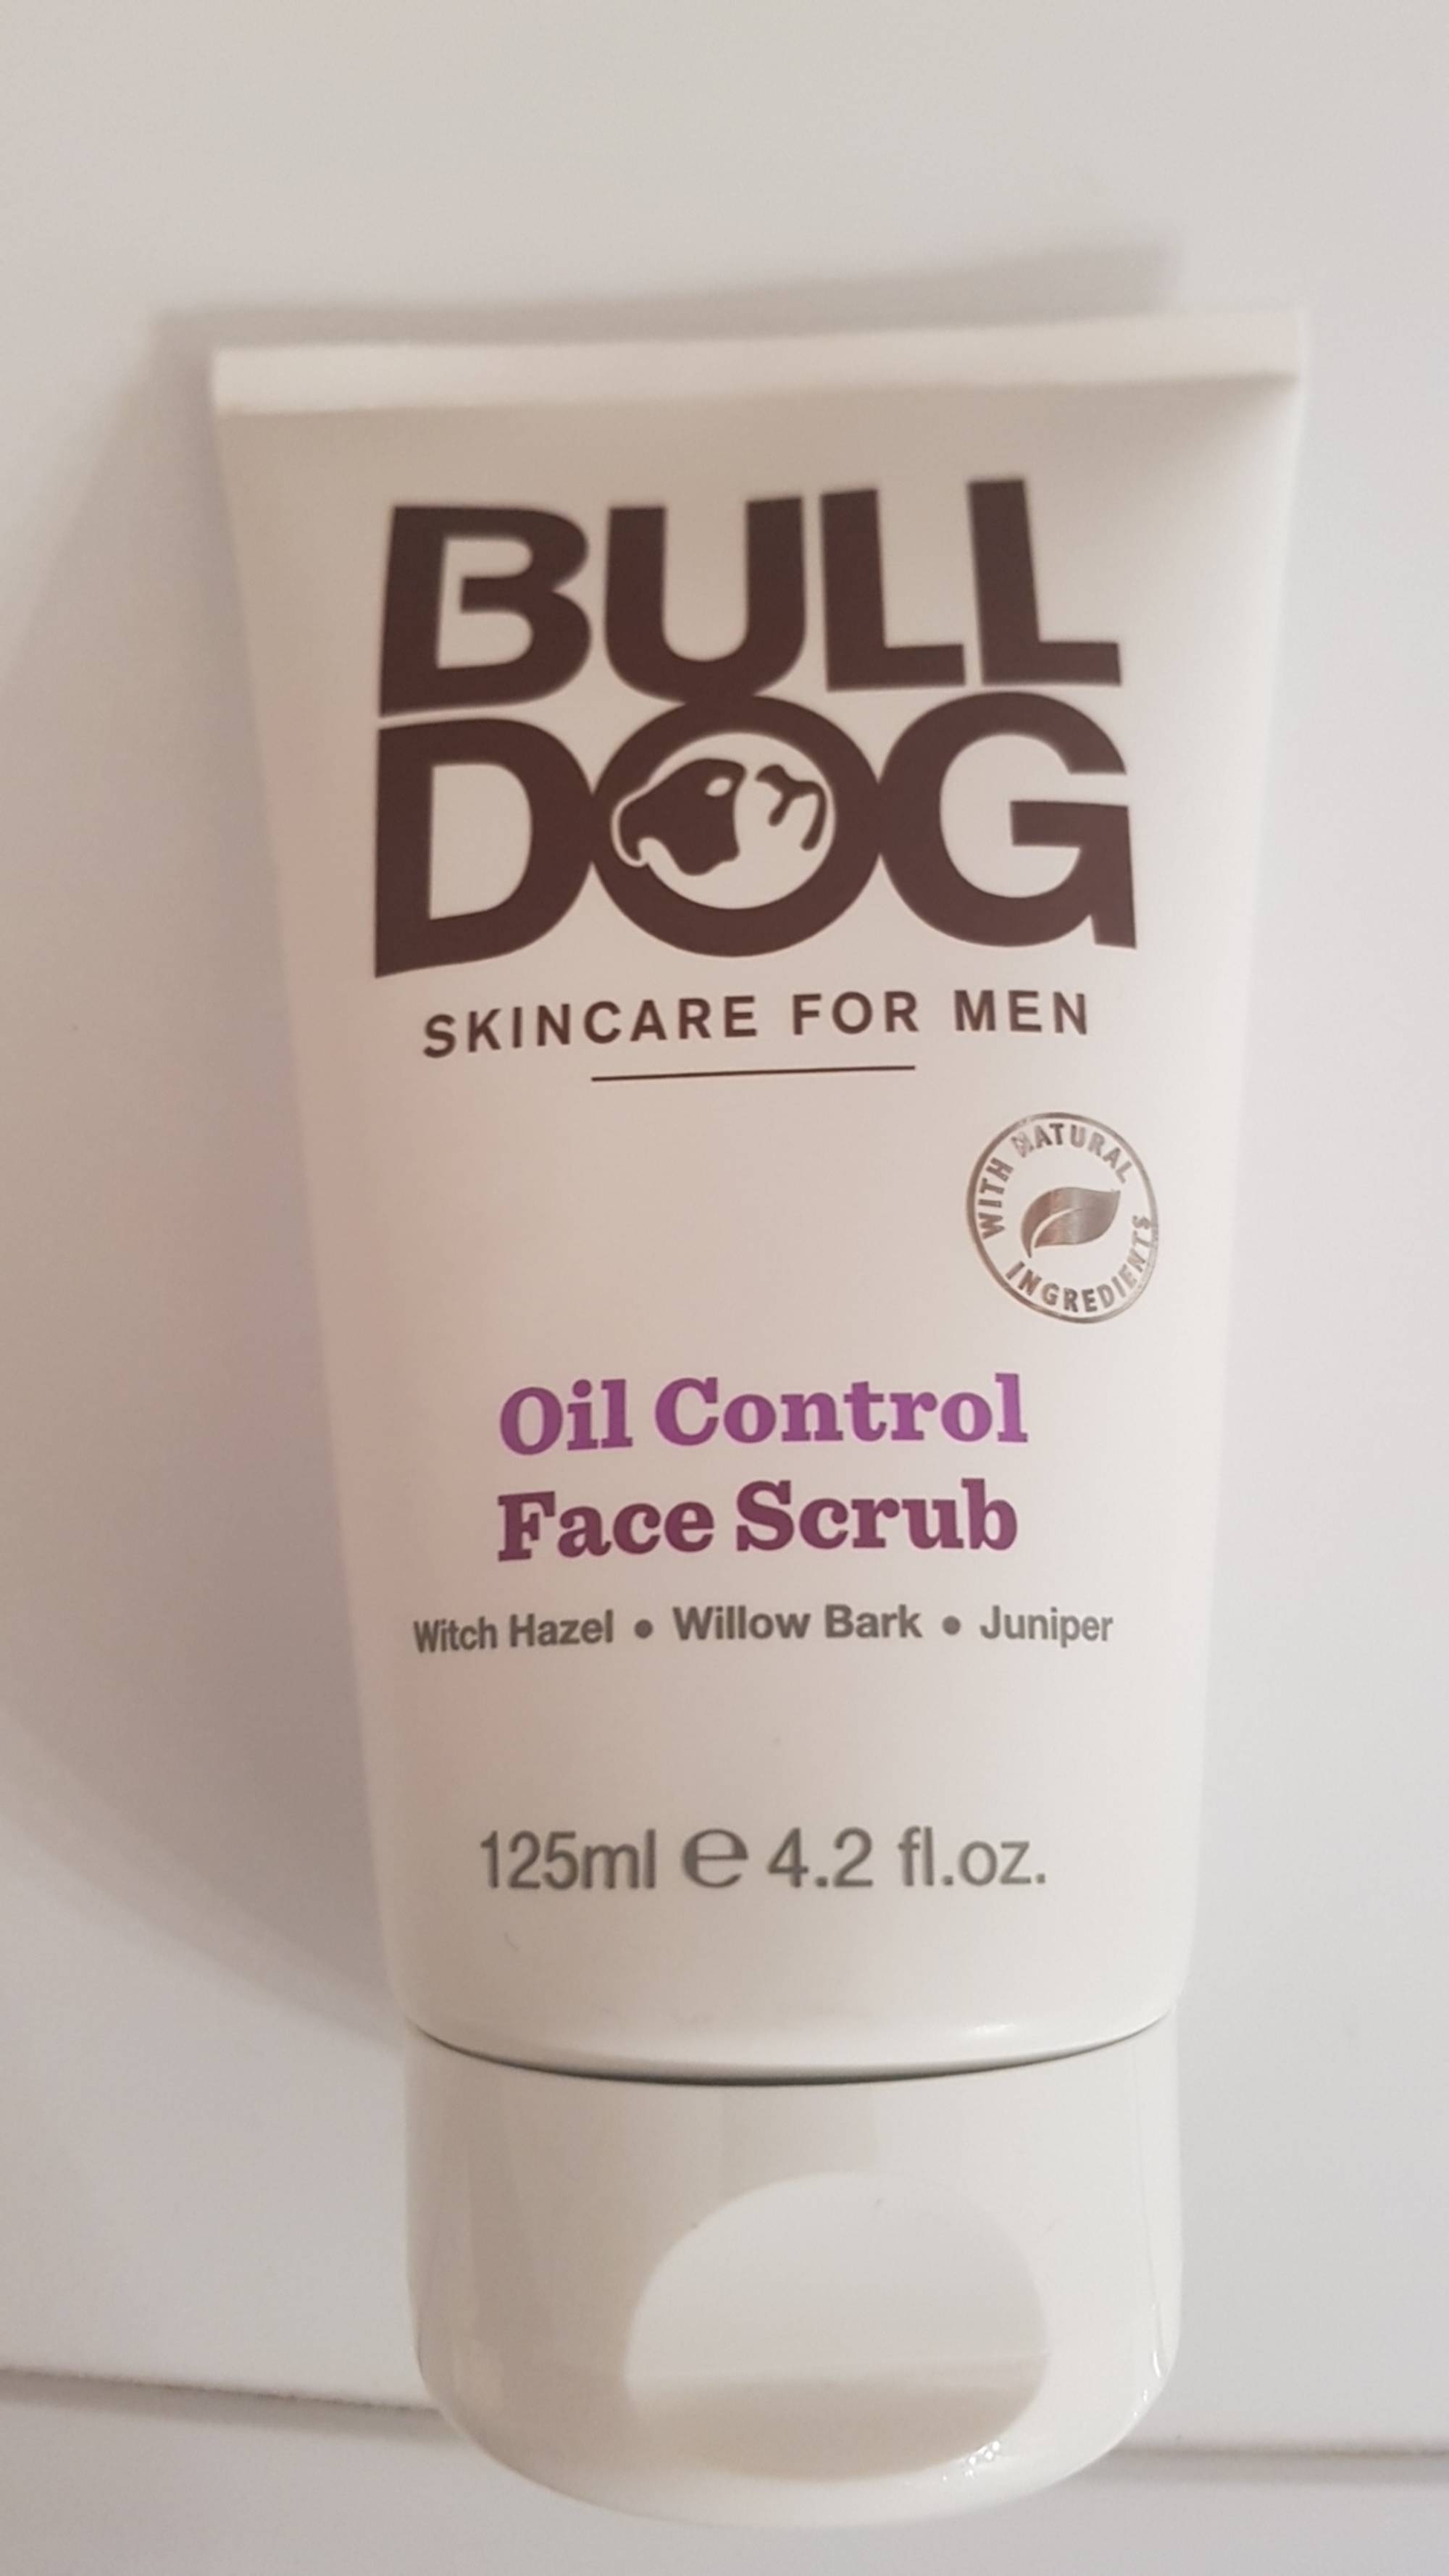 BULL DOG - Oil control - Face scrub for men